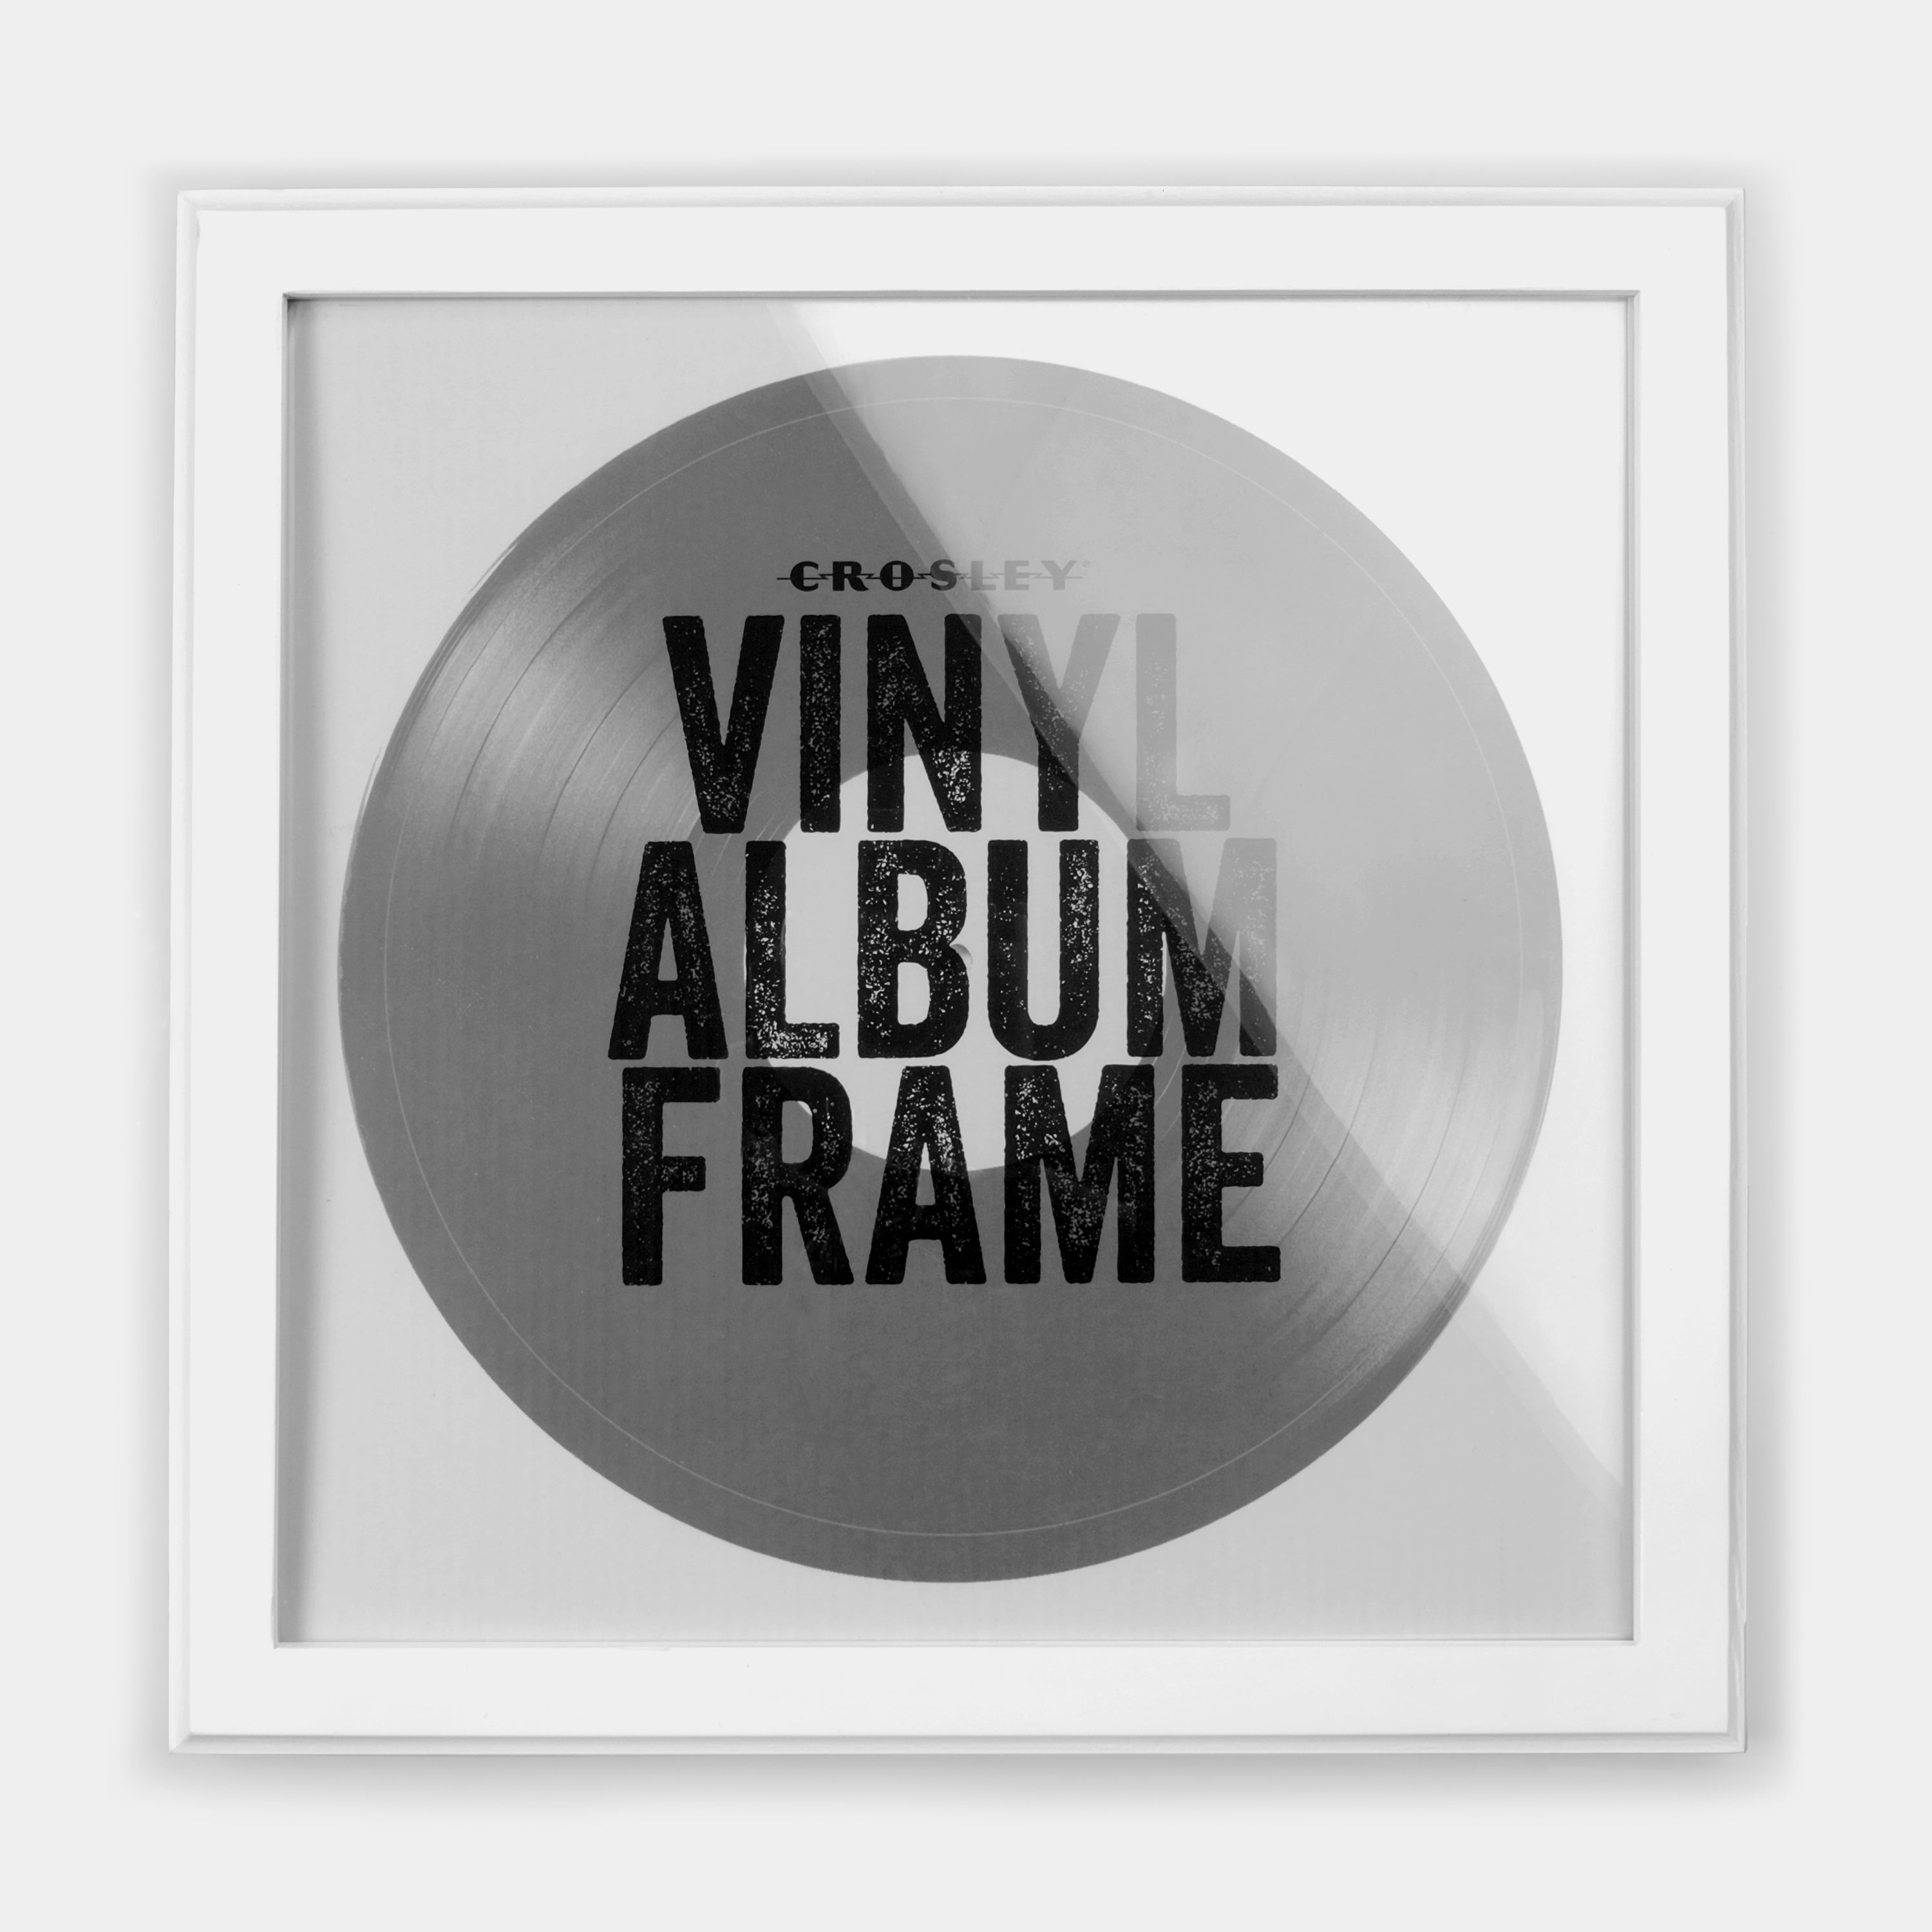 Crosley Wood Vinyl Record Frame - White